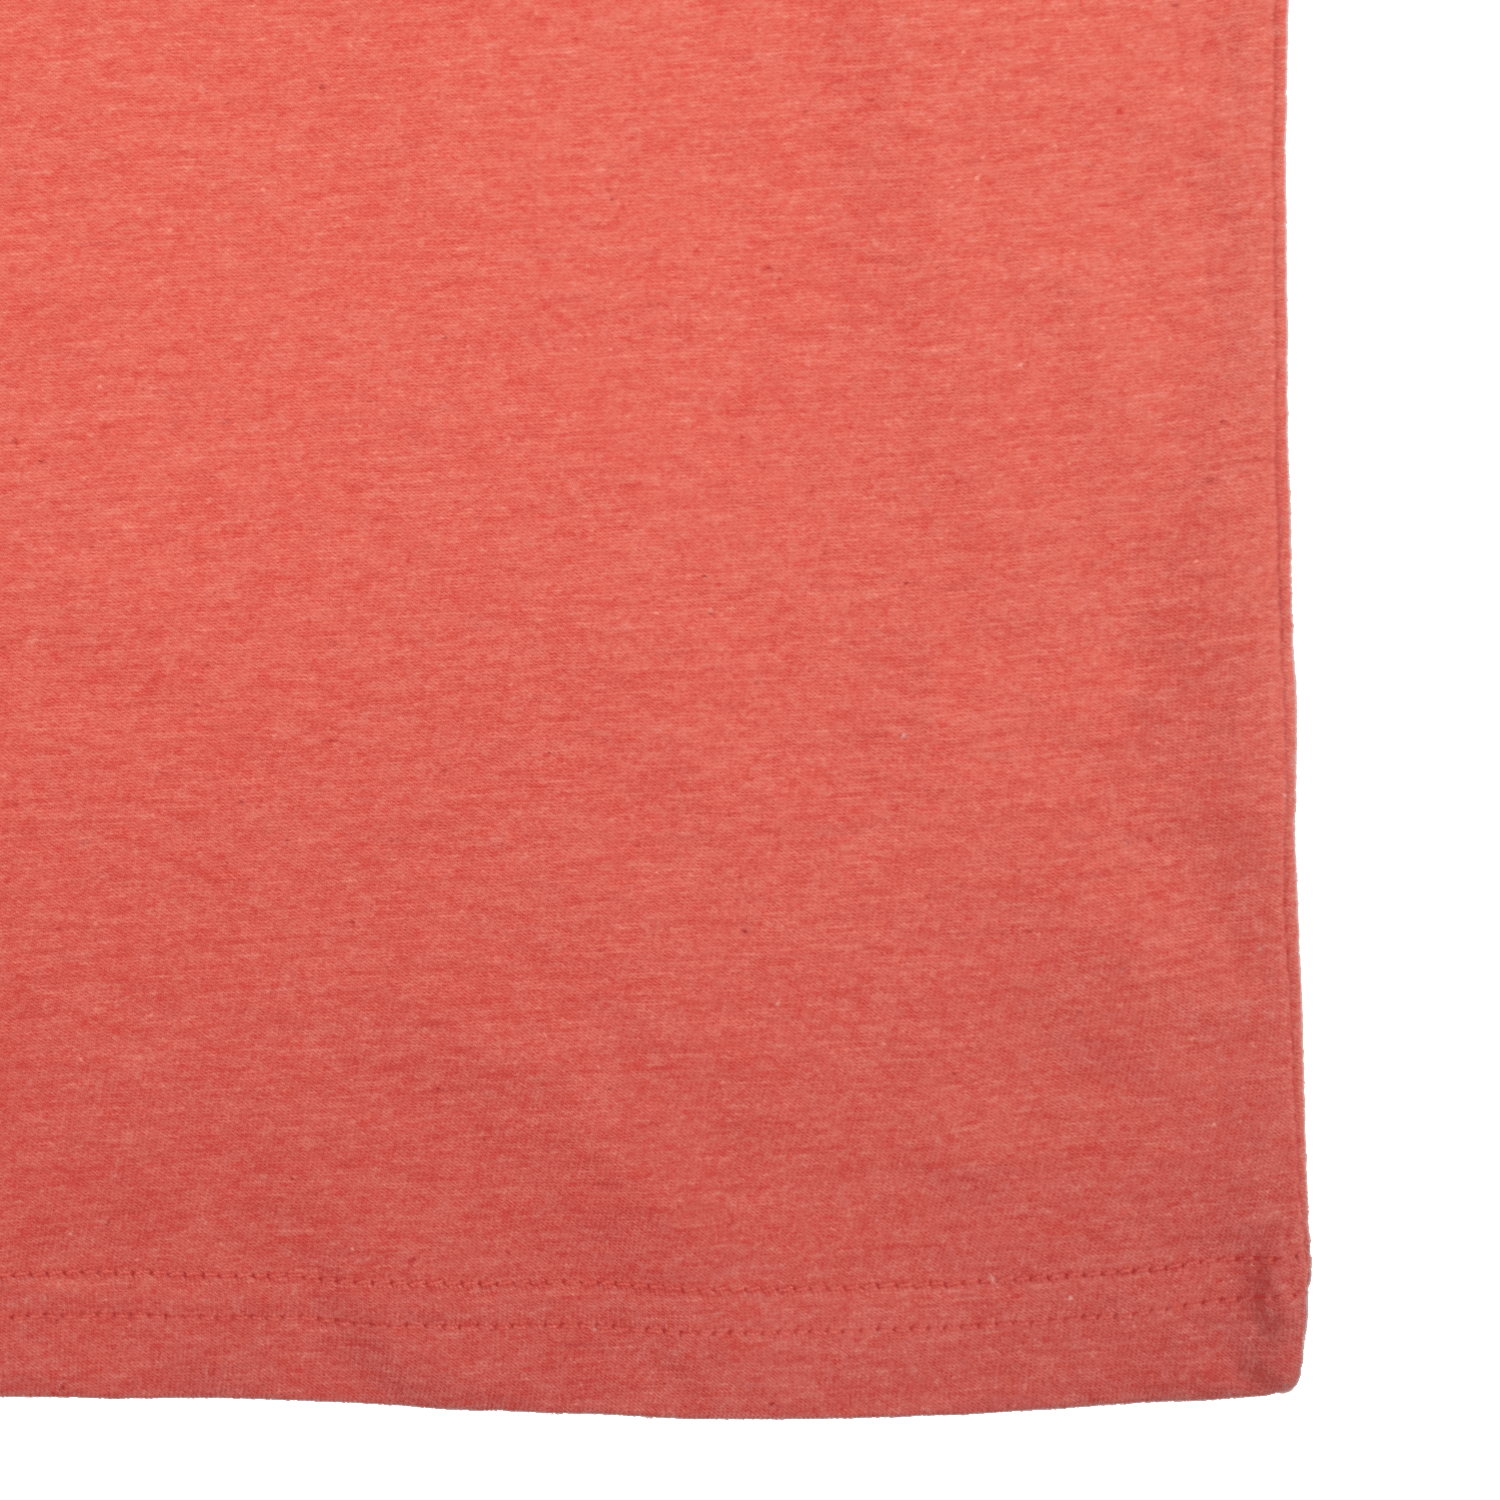 Stone Harbor Men's T-Shirt MEN'S TEXTURED TOMATO RED T-SHIRT